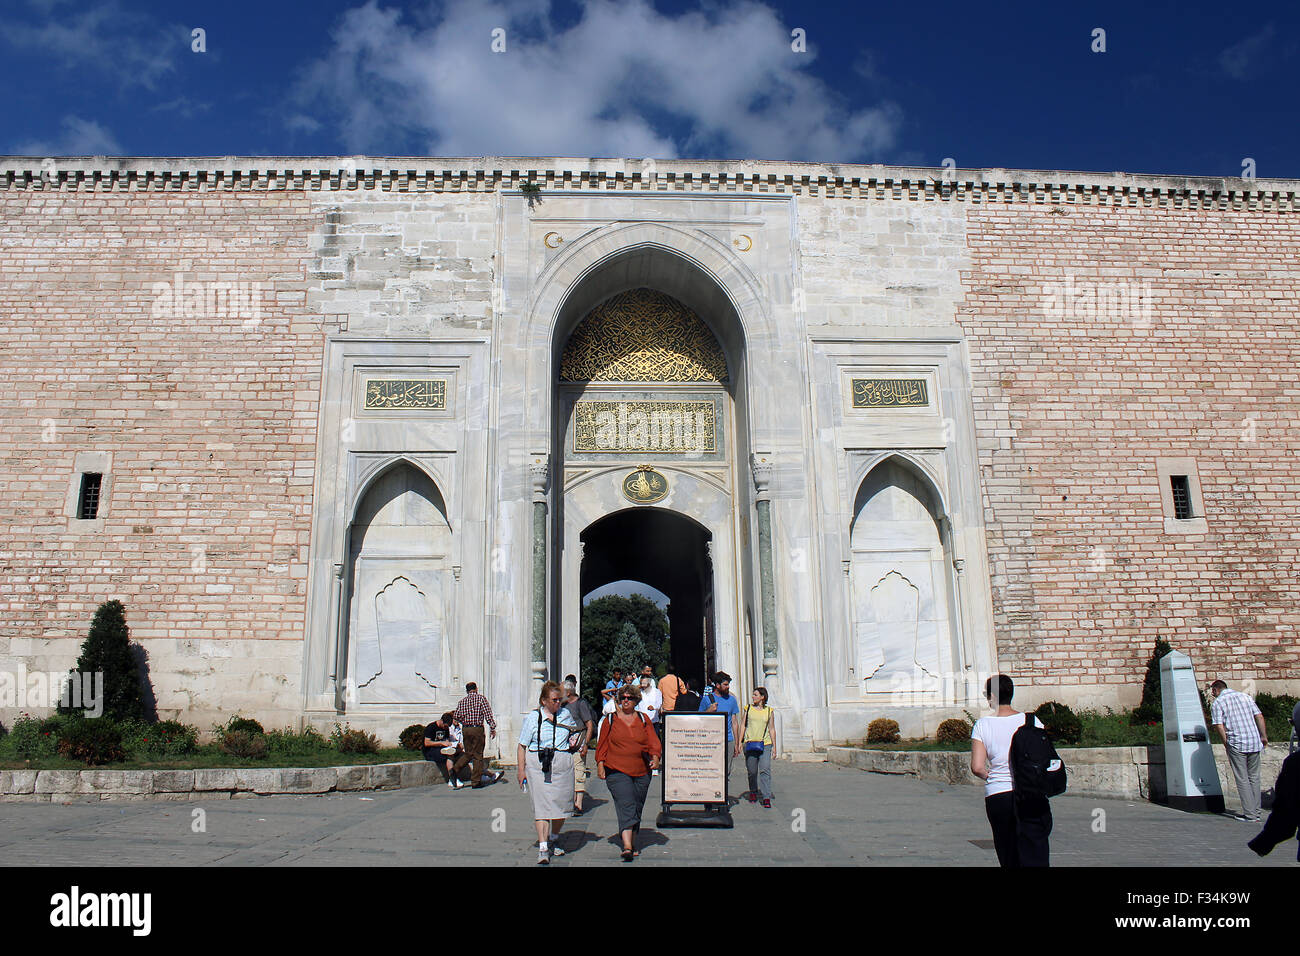 Istanbul, Turkey - September 18, 2015: Tourists visiting Topkapi Palace in Istanbul, Turkey. Stock Photo